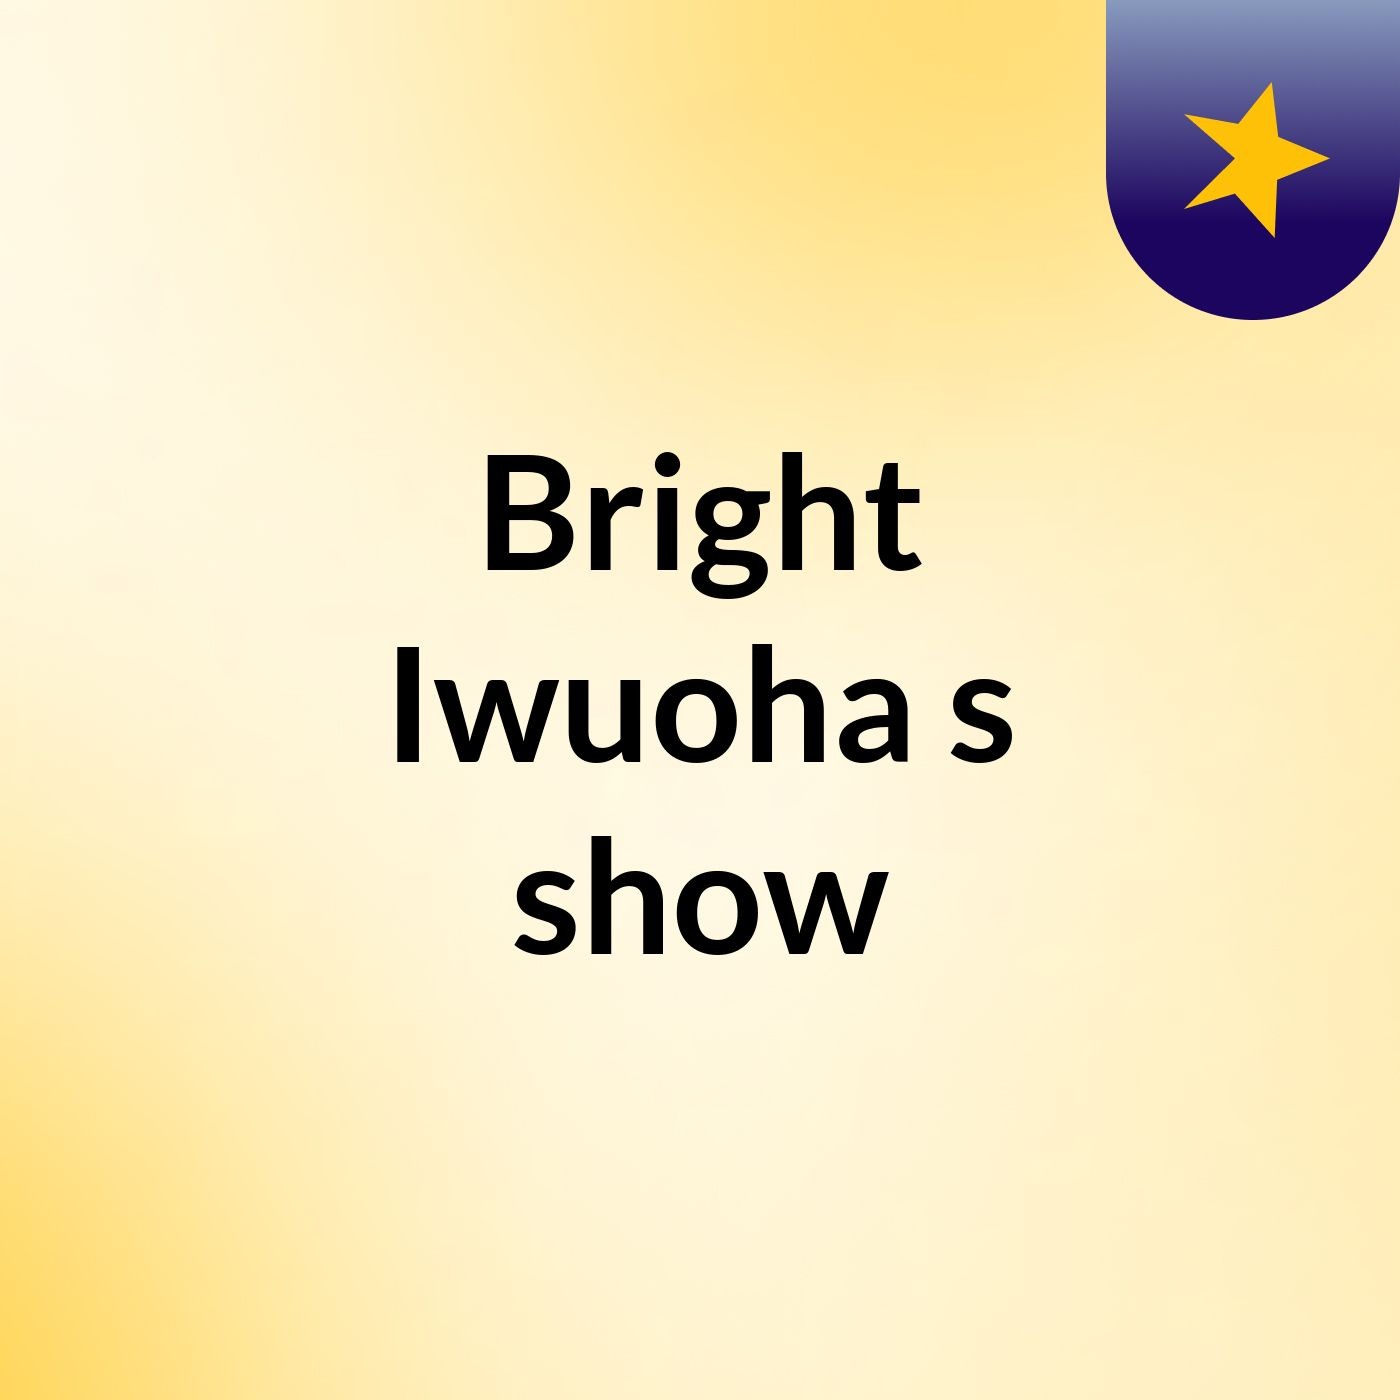 Bright Iwuoha's show